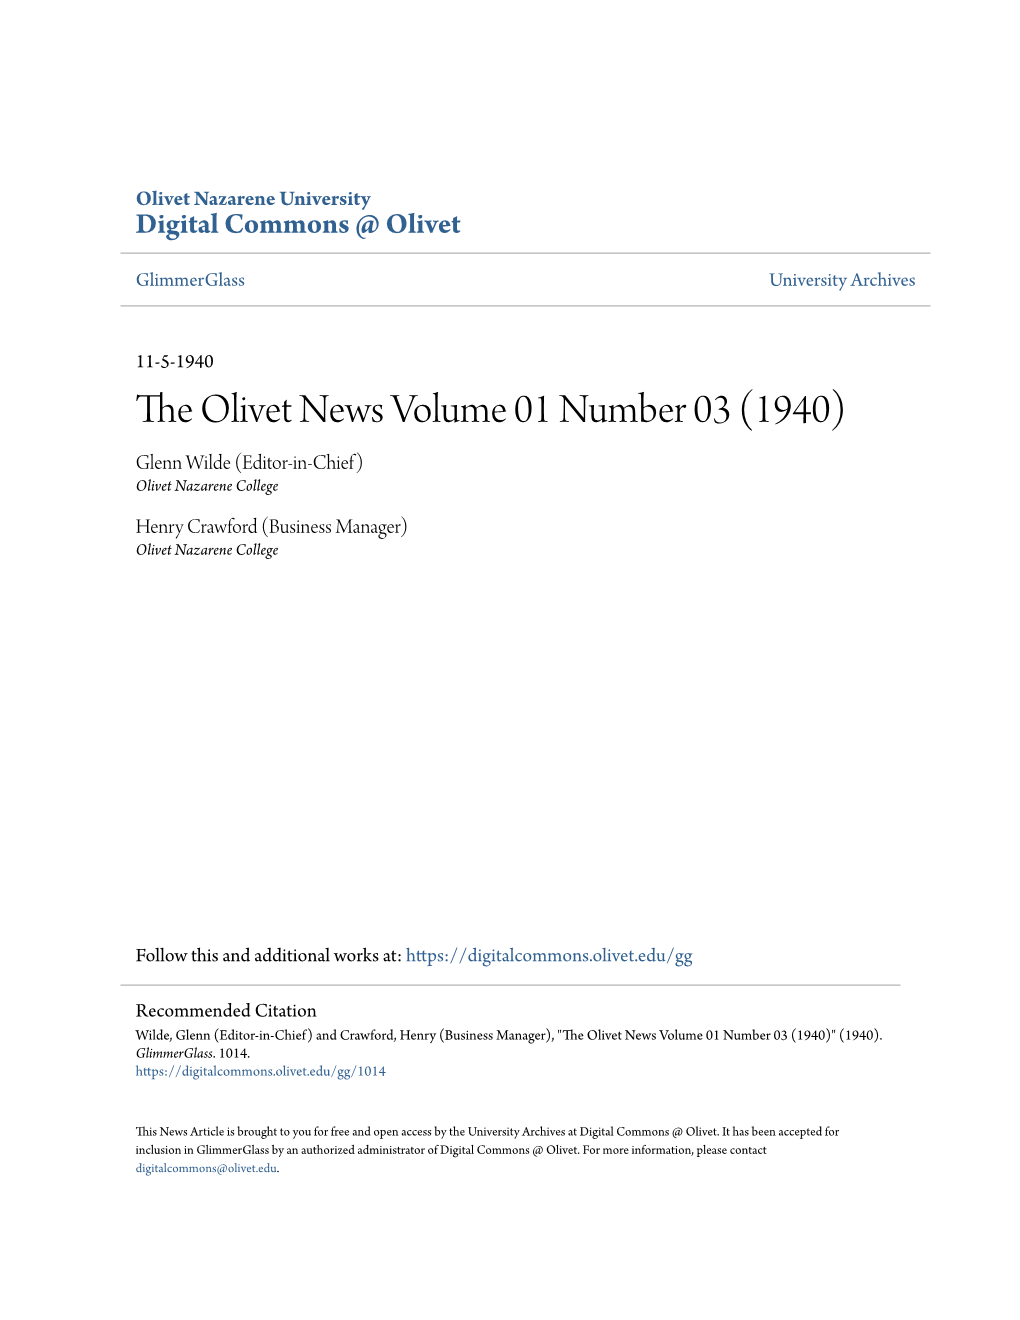 The Olivet News Volume 01 Number 03 (1940) Glenn Wilde (Editor-In-Chief) Olivet Nazarene College